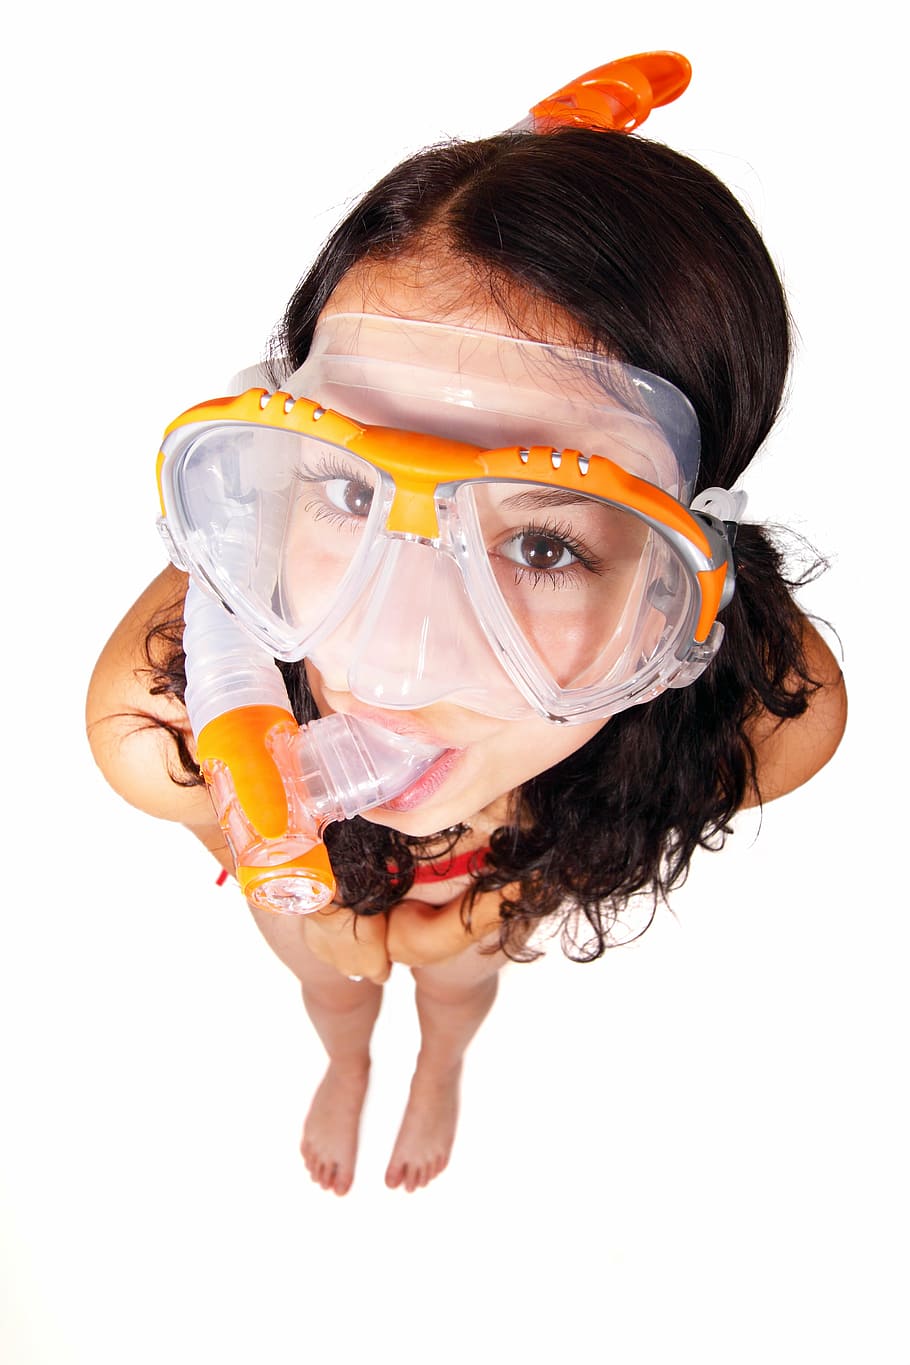 clear, plastic, orange, snorkle, cute, dive, fun, goggles, joy, mask